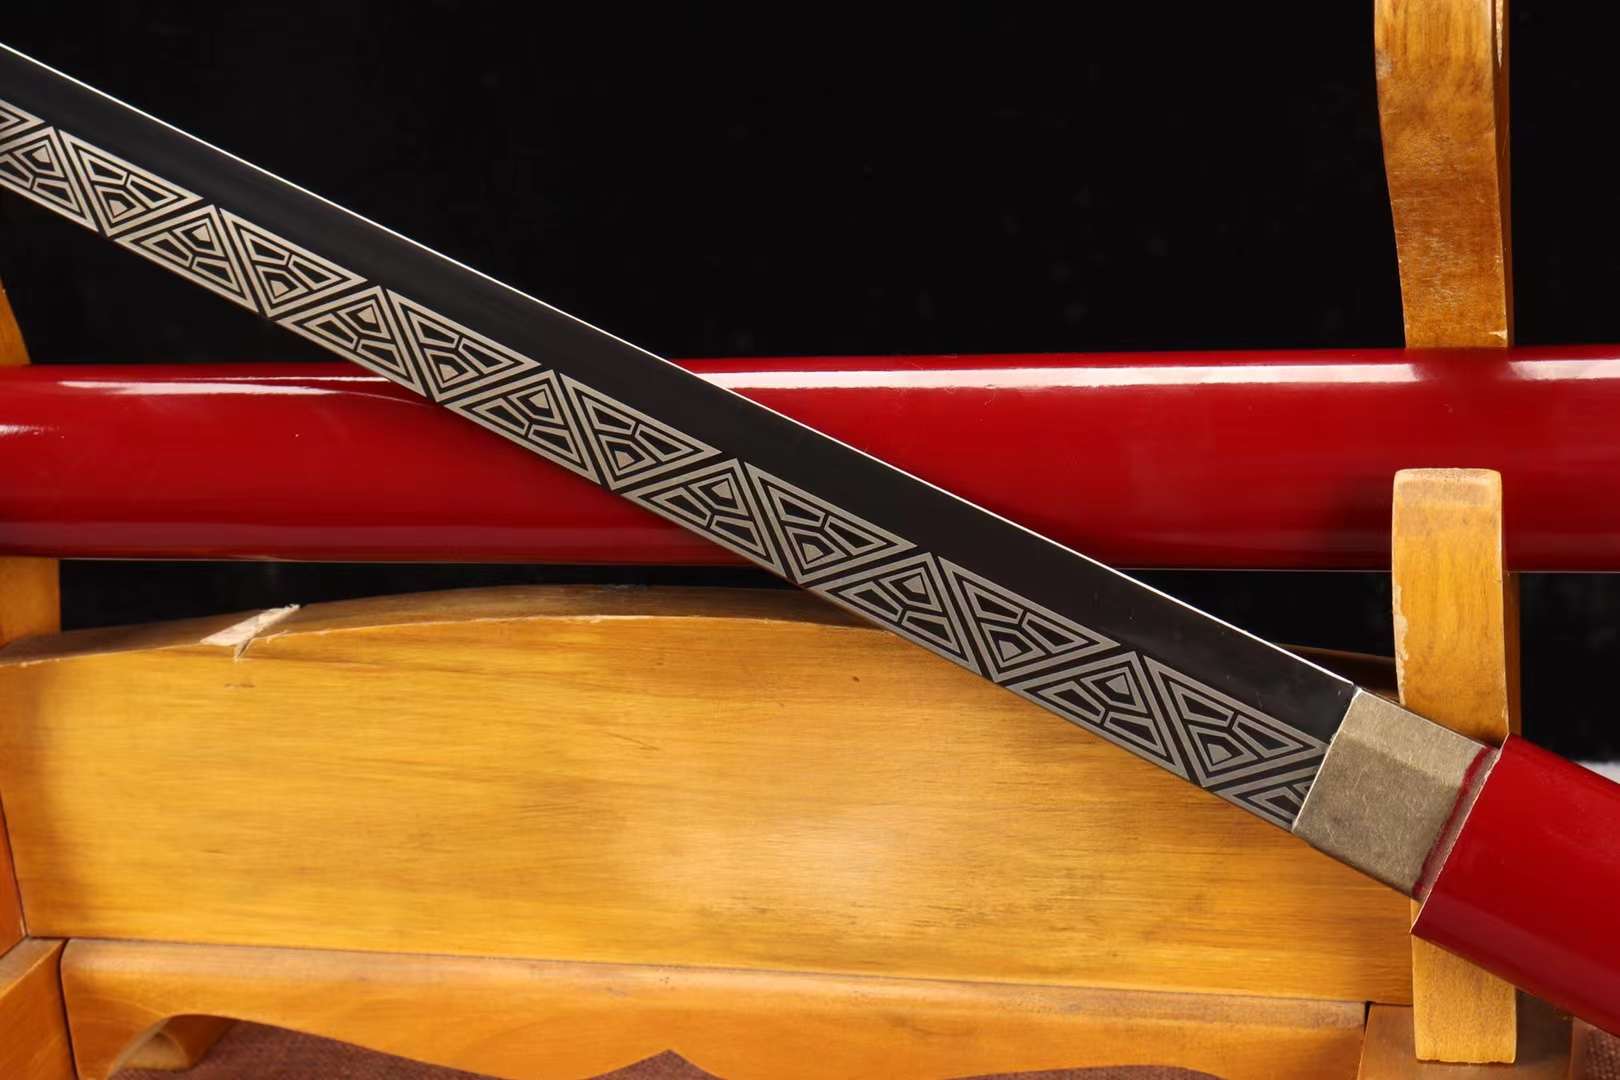 Japanese samurai sword,1065 Steel katana sword,Zatoichi Sword,Kitano Takeshi Sword Katana Reprint loveyitadj